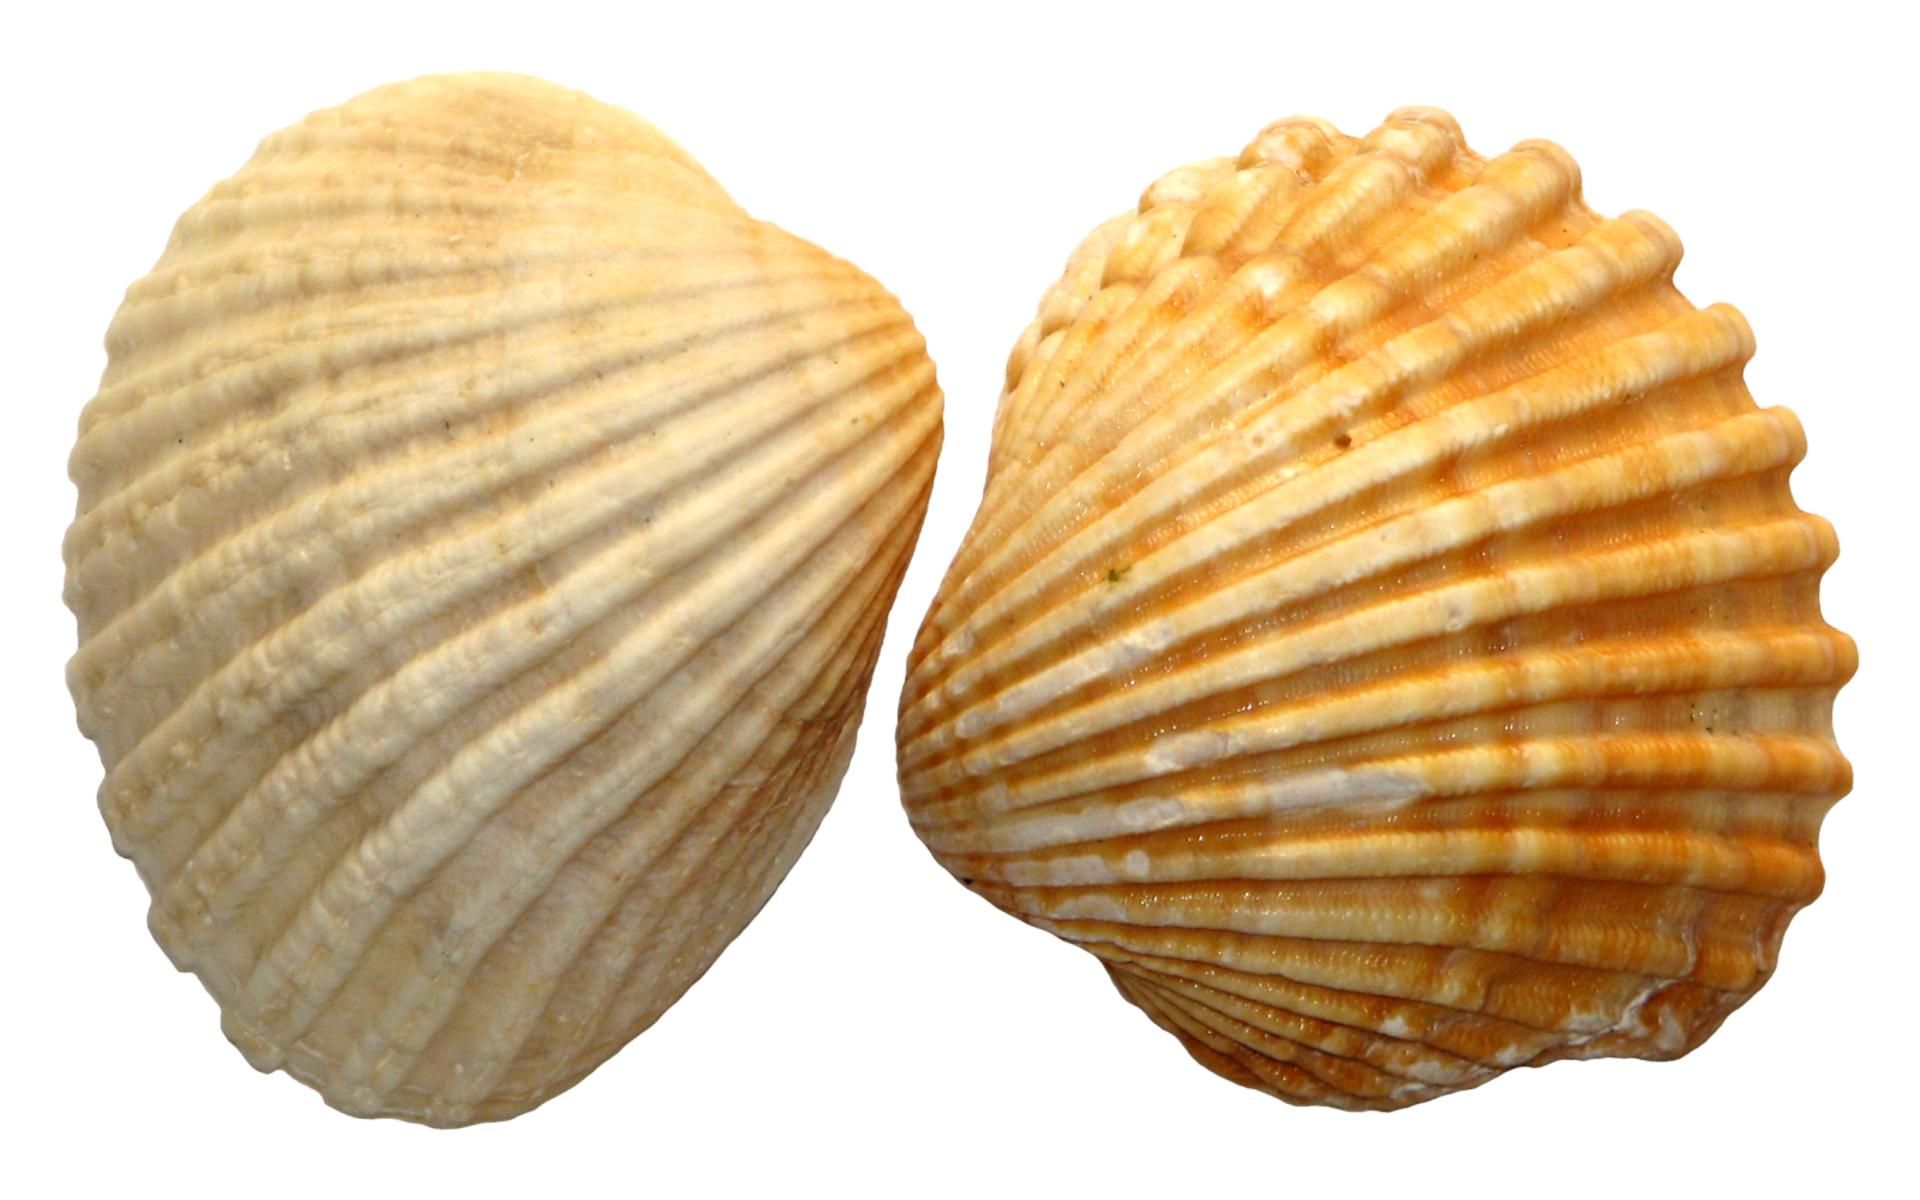 sea-shells-on-light-wallpapers.jpg 1,920×1,200 pixels